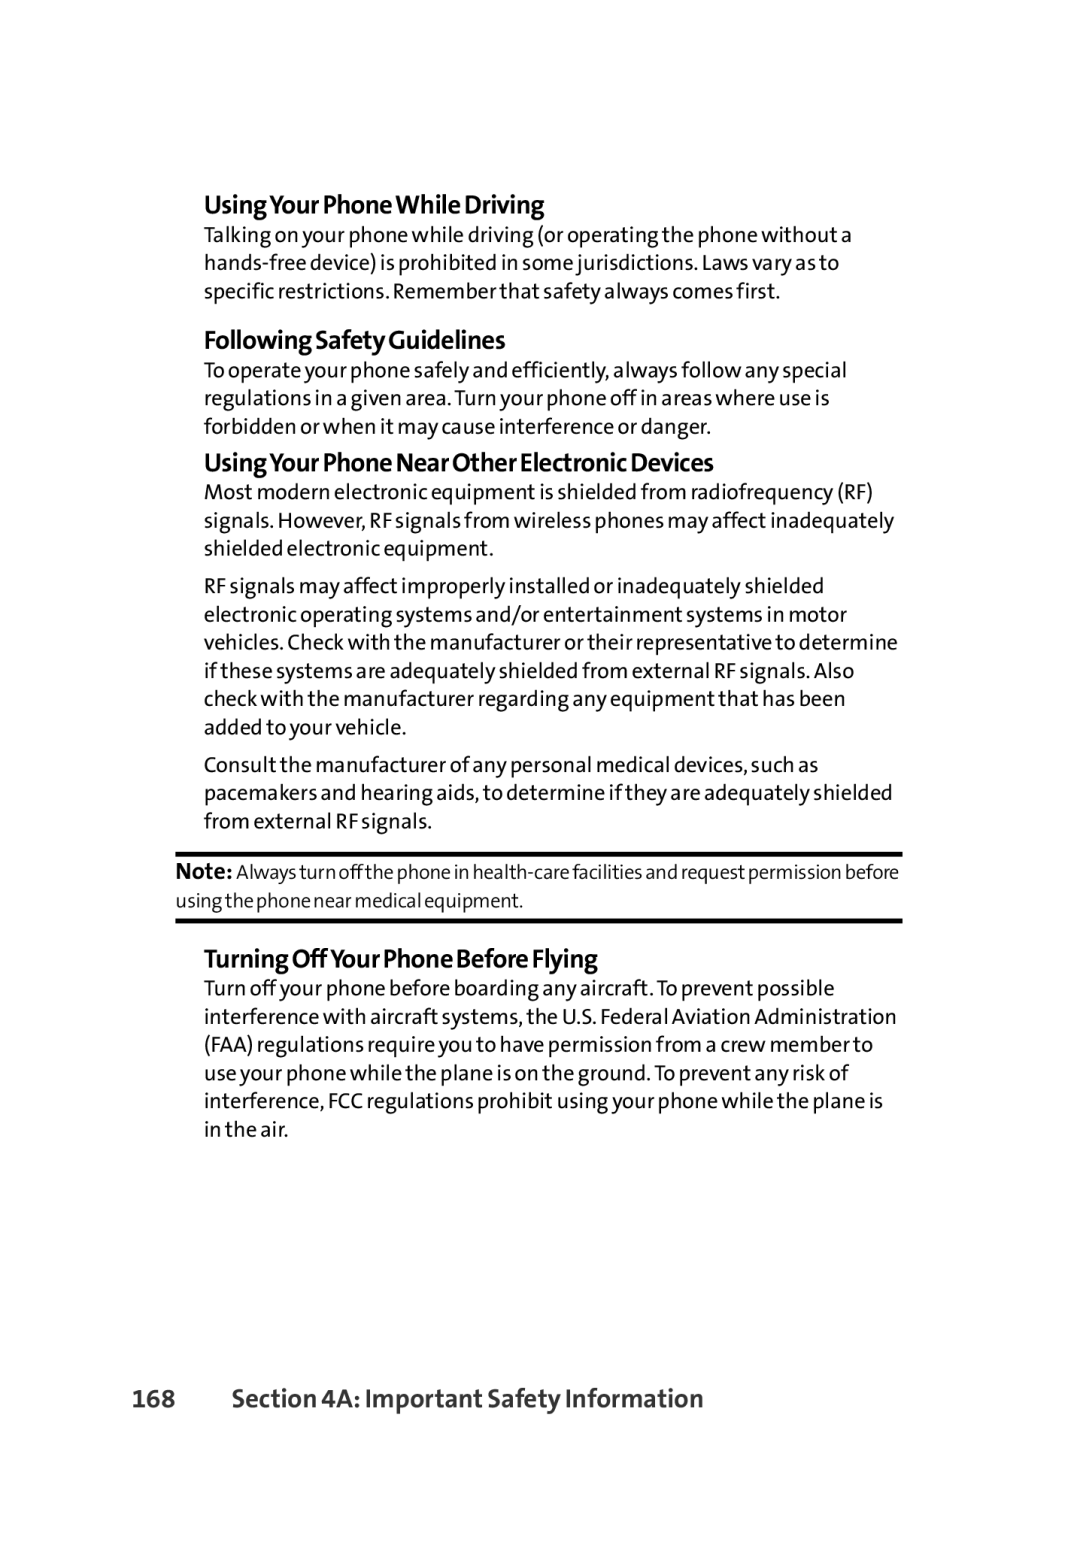 LG Electronics 350 manual UsingYourPhoneWhileDriving, FollowingSafetyGuidelines, UsingYourPhoneNearOtherElectronicDevices 